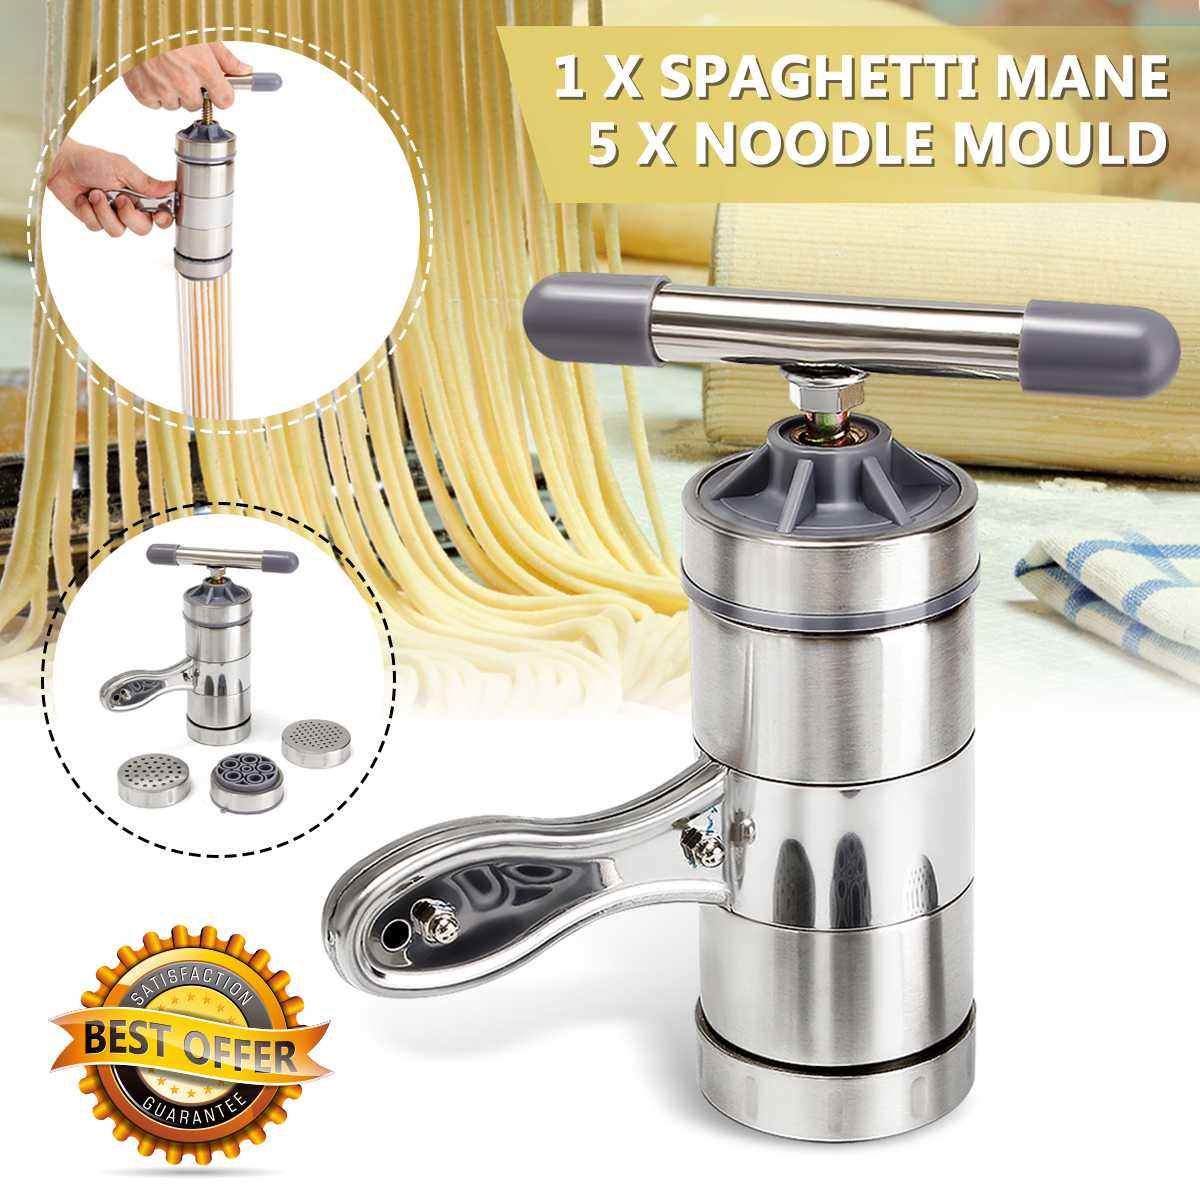 Best Deal for pasta Maker Stainless Steel Manual Noodle Maker Machine